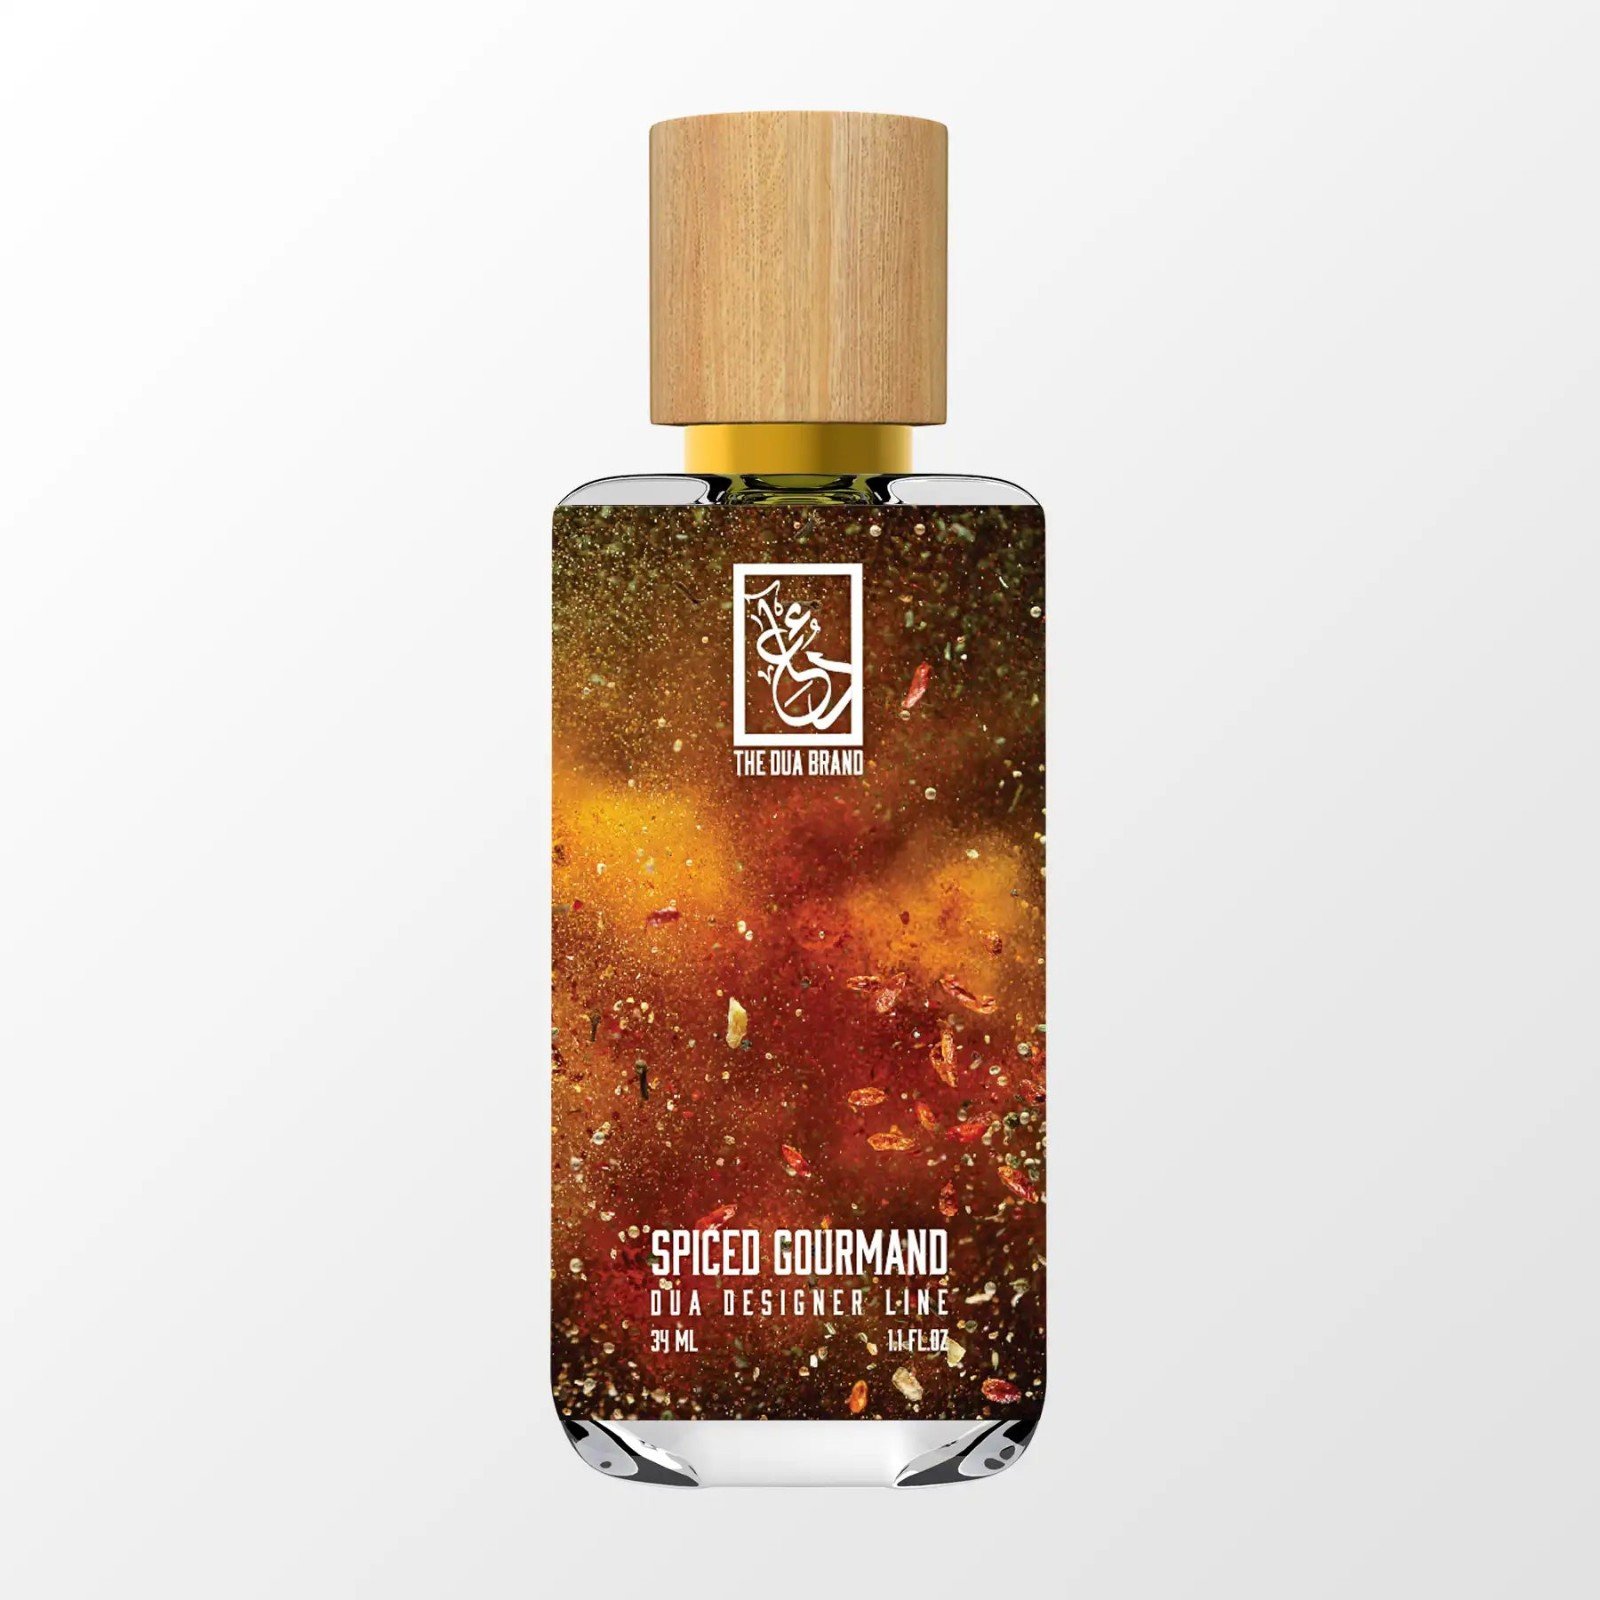 Dua fragrance sample Spiced Gourmand f4Zm9U6lT